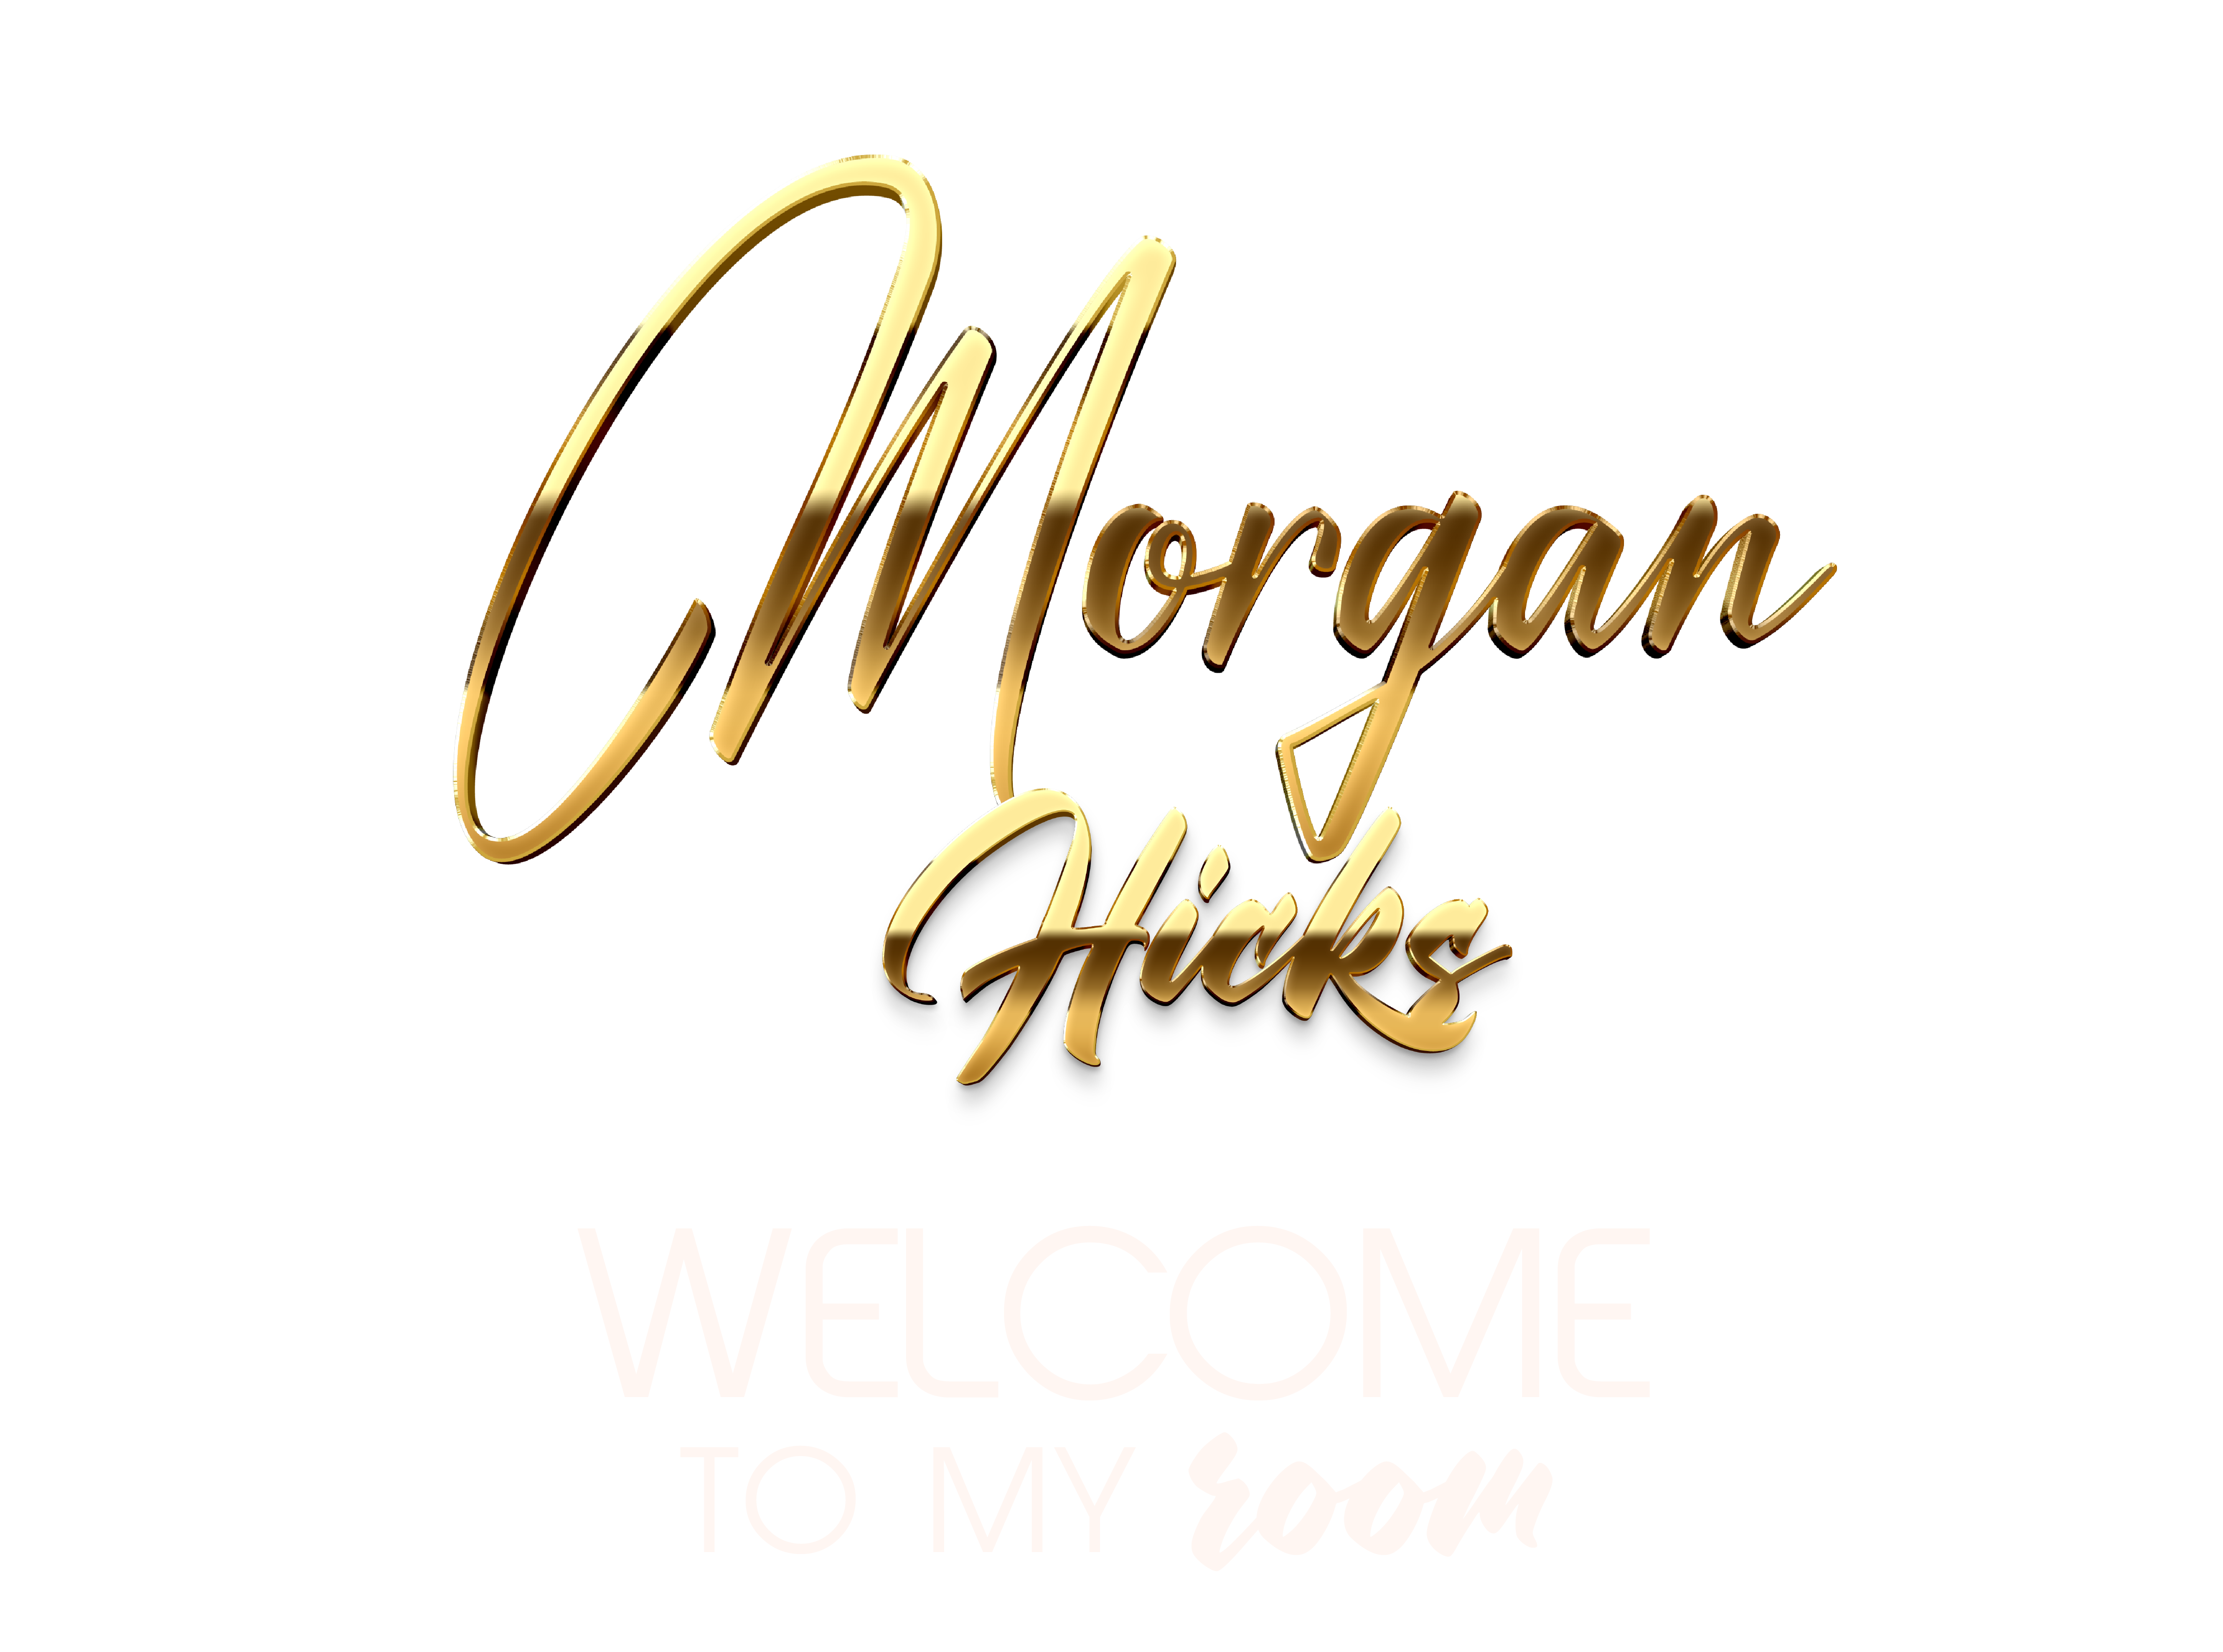 MorganHicks Welcome image: 1